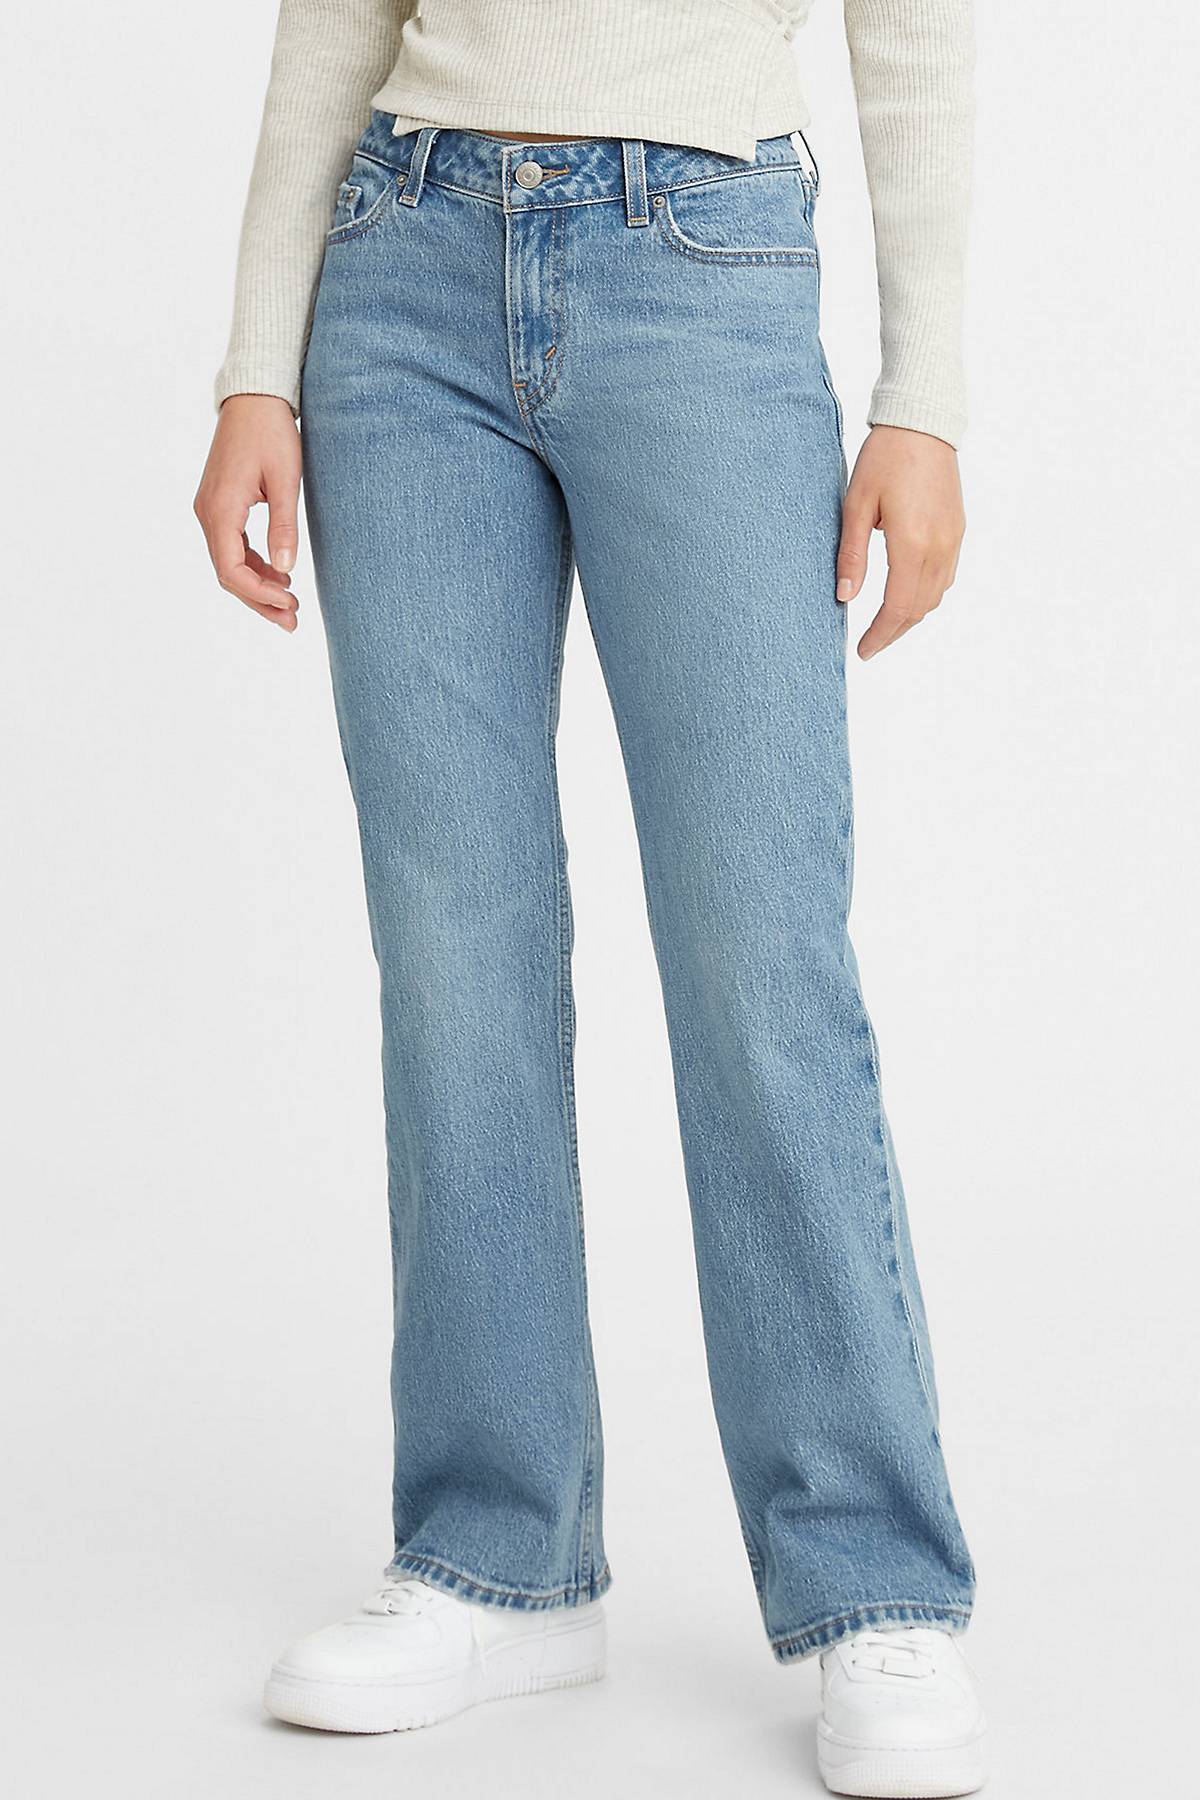 Model wearing Low Pitch Bootcut Jeans